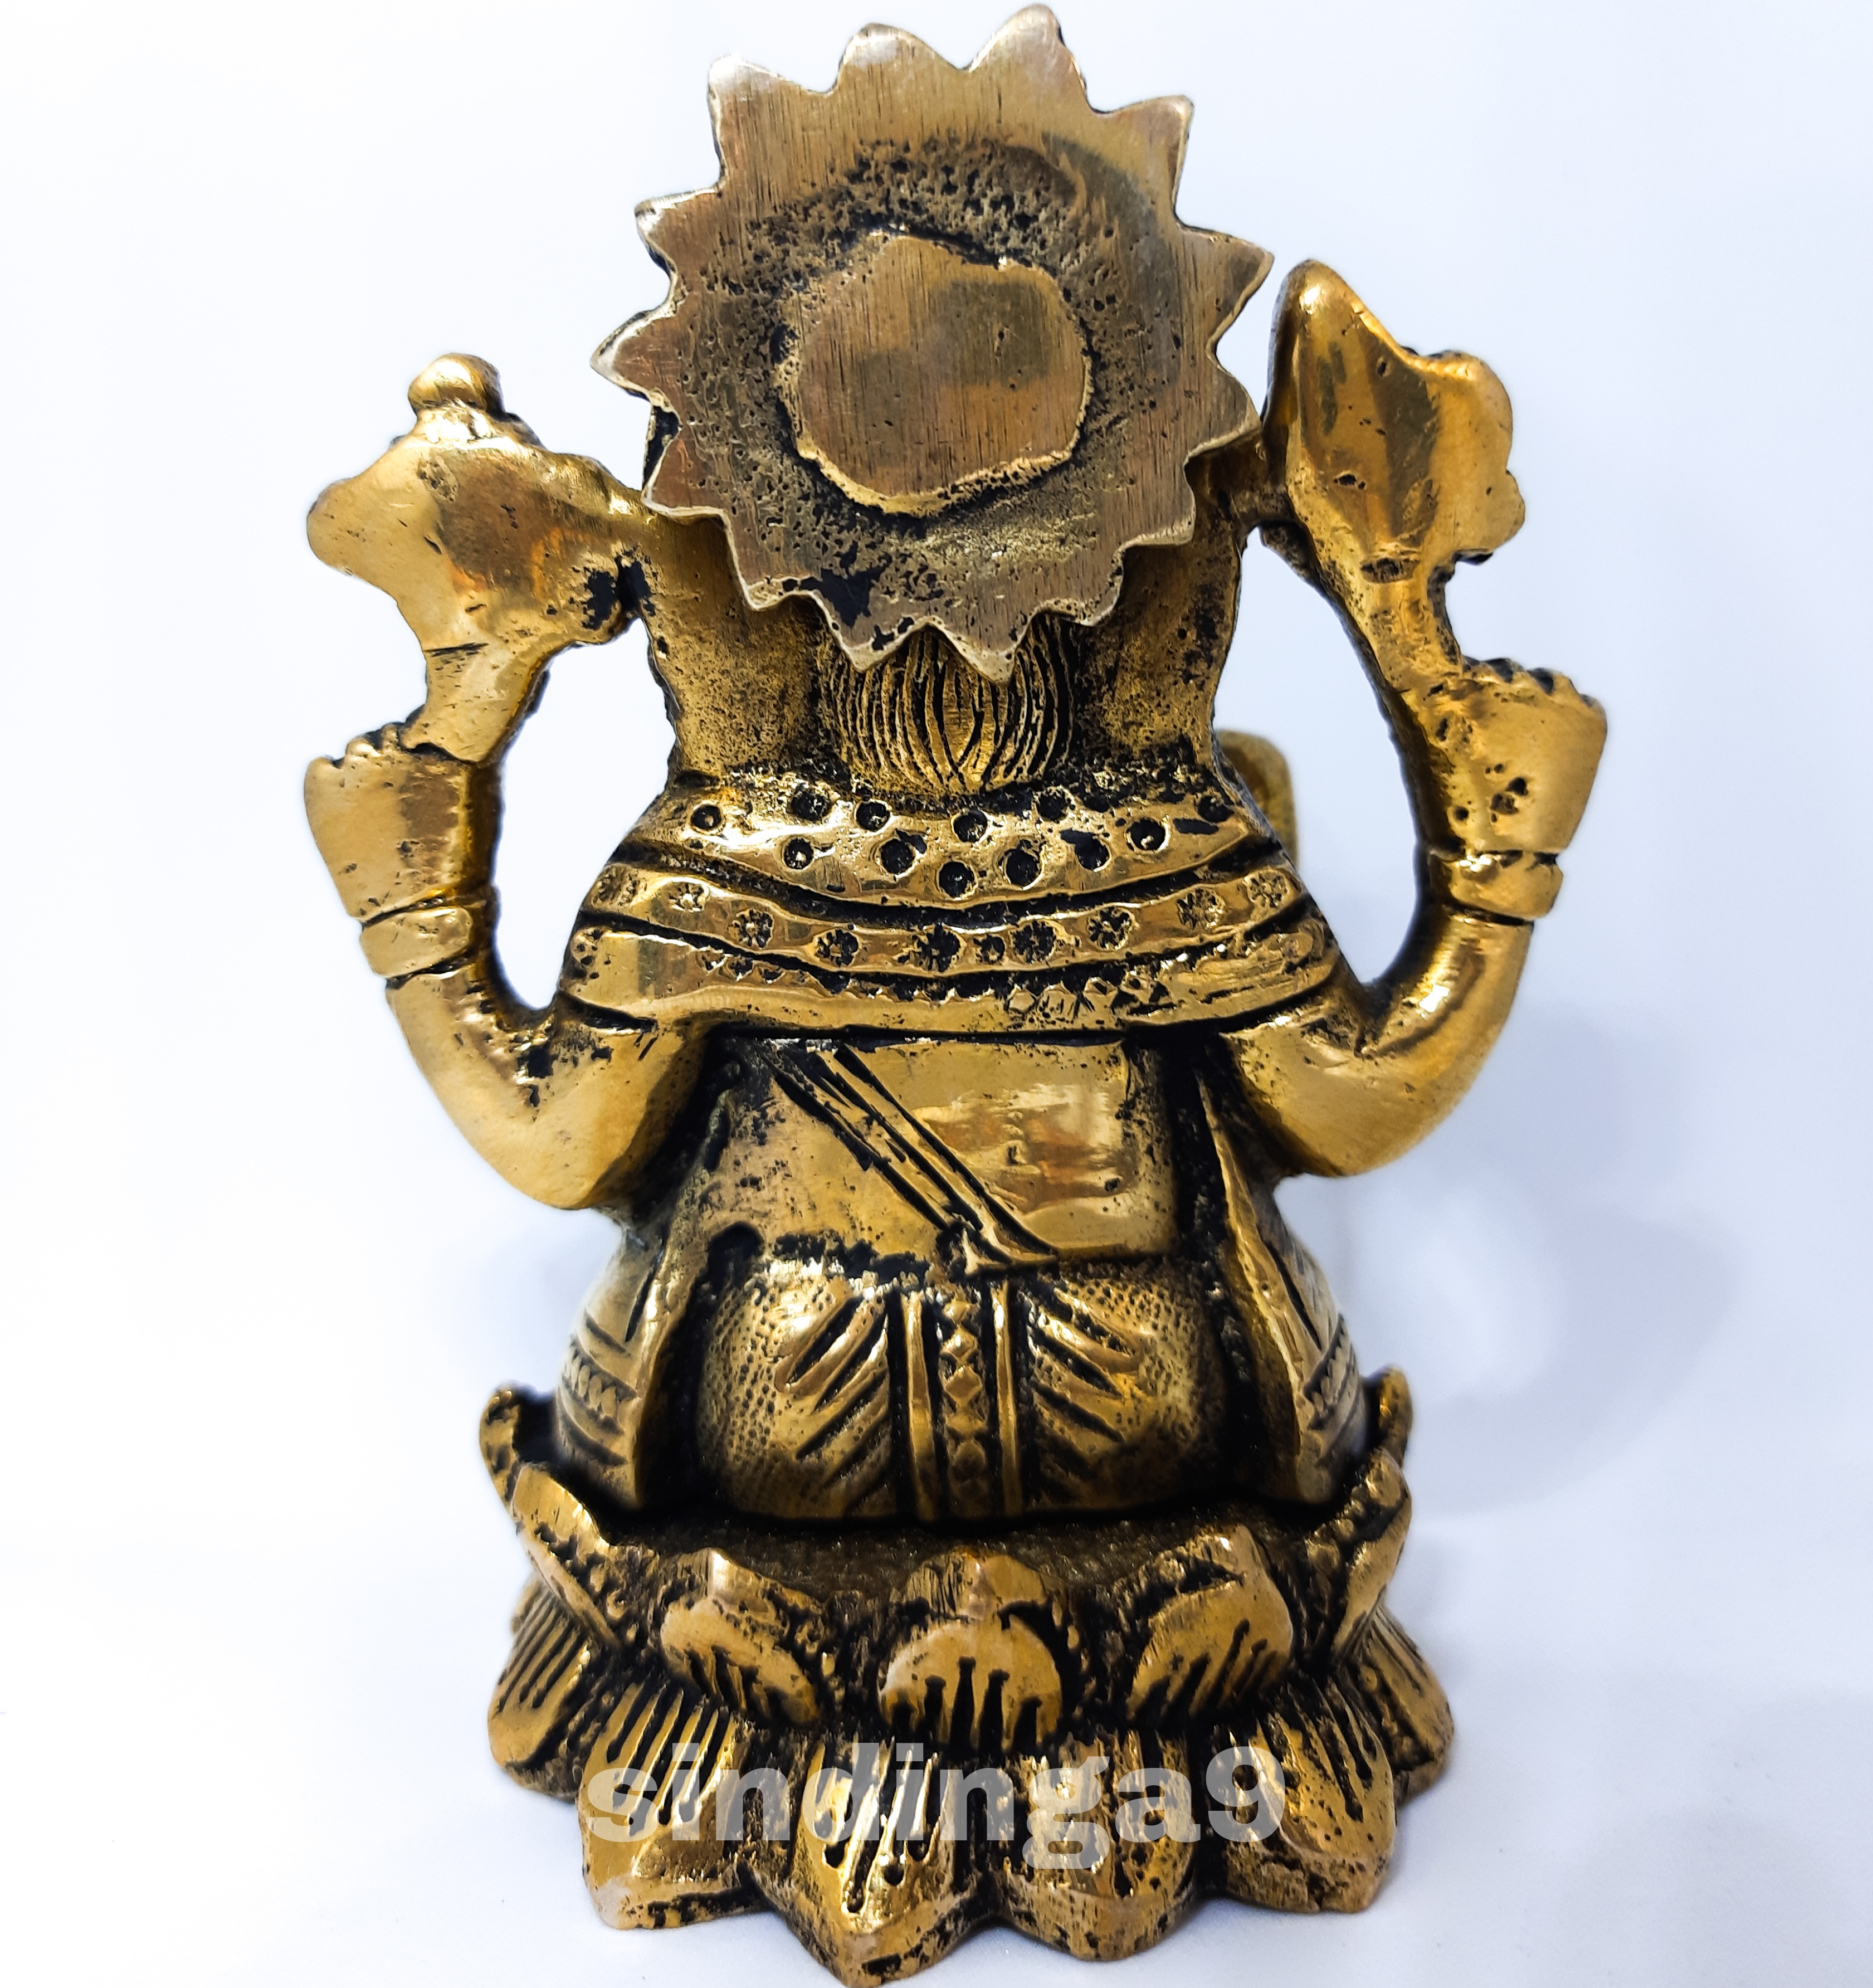 Vinayagar brass statue